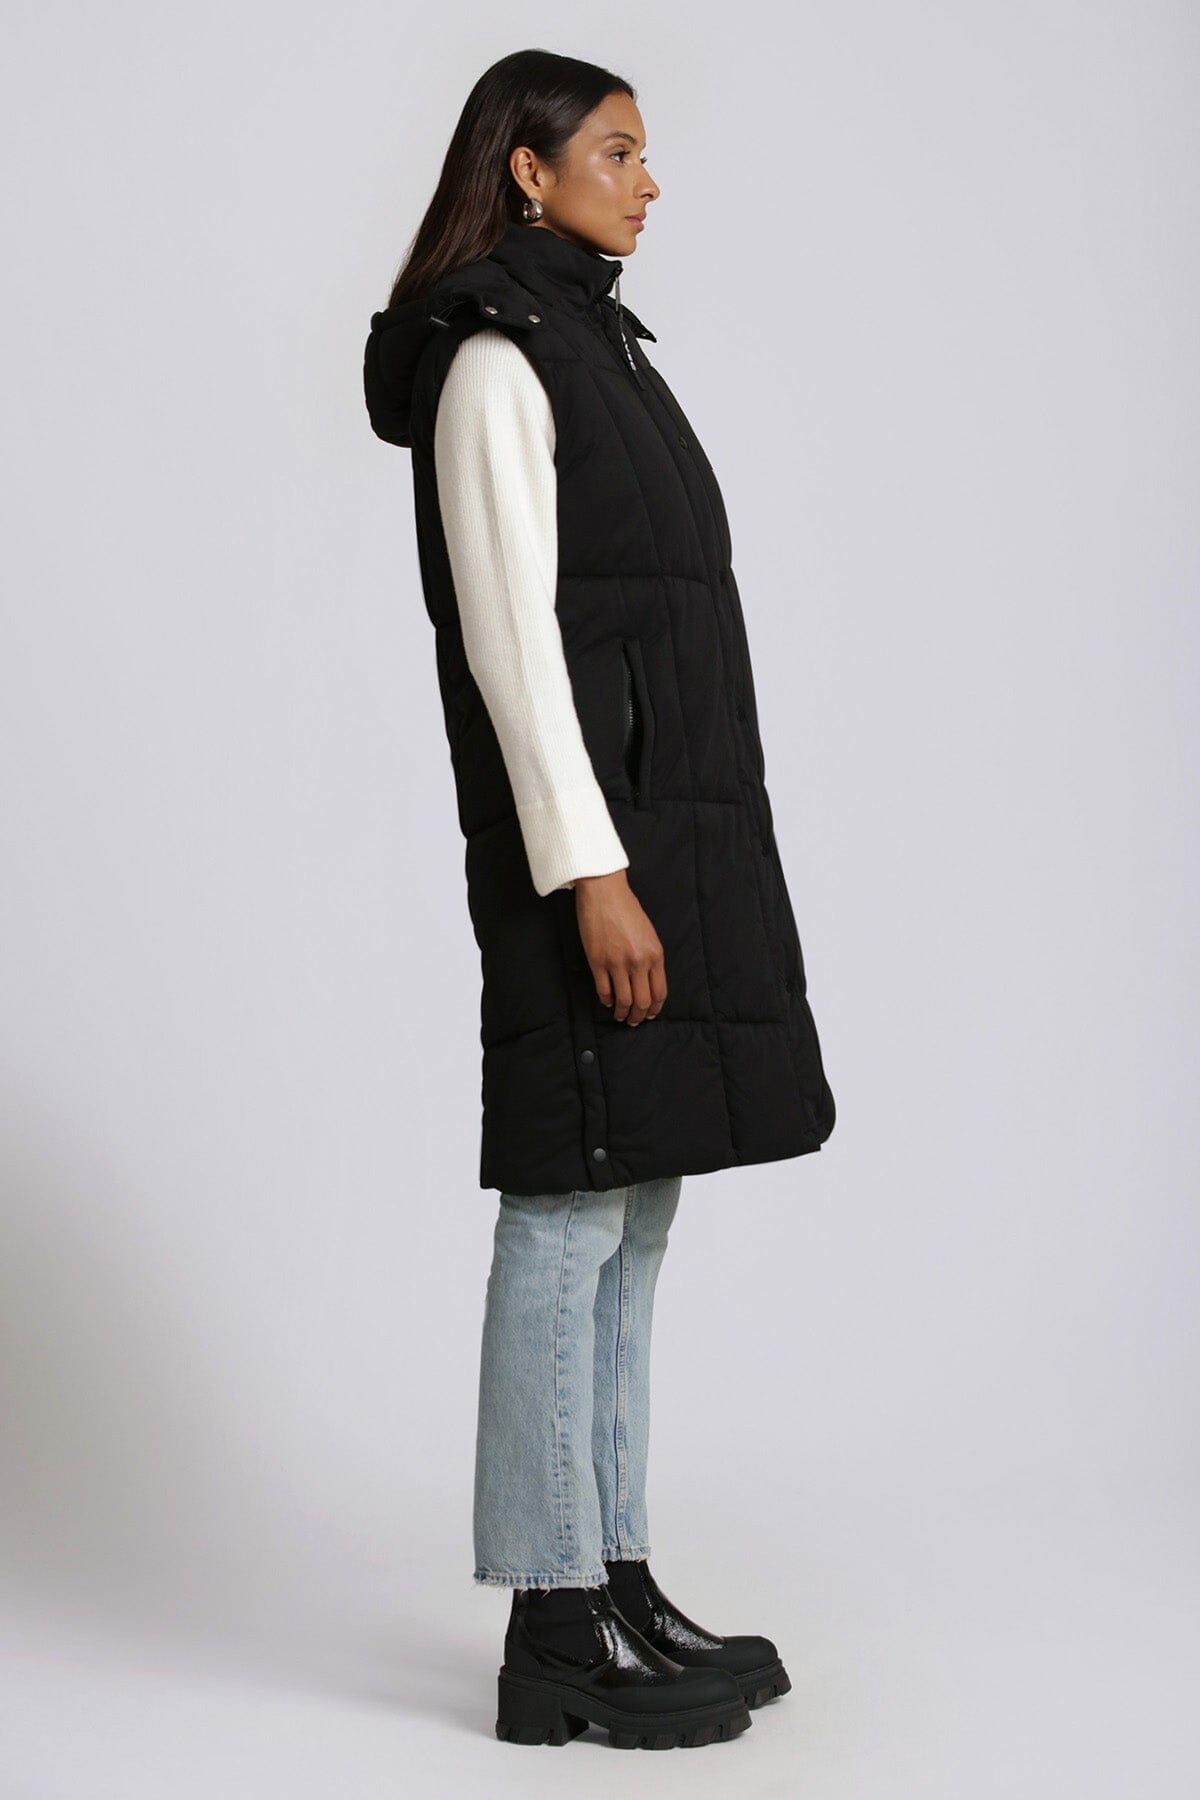 thermal puff hooded longline puffer vest black - figure flattering designer fashion cute long vests outerwear for women